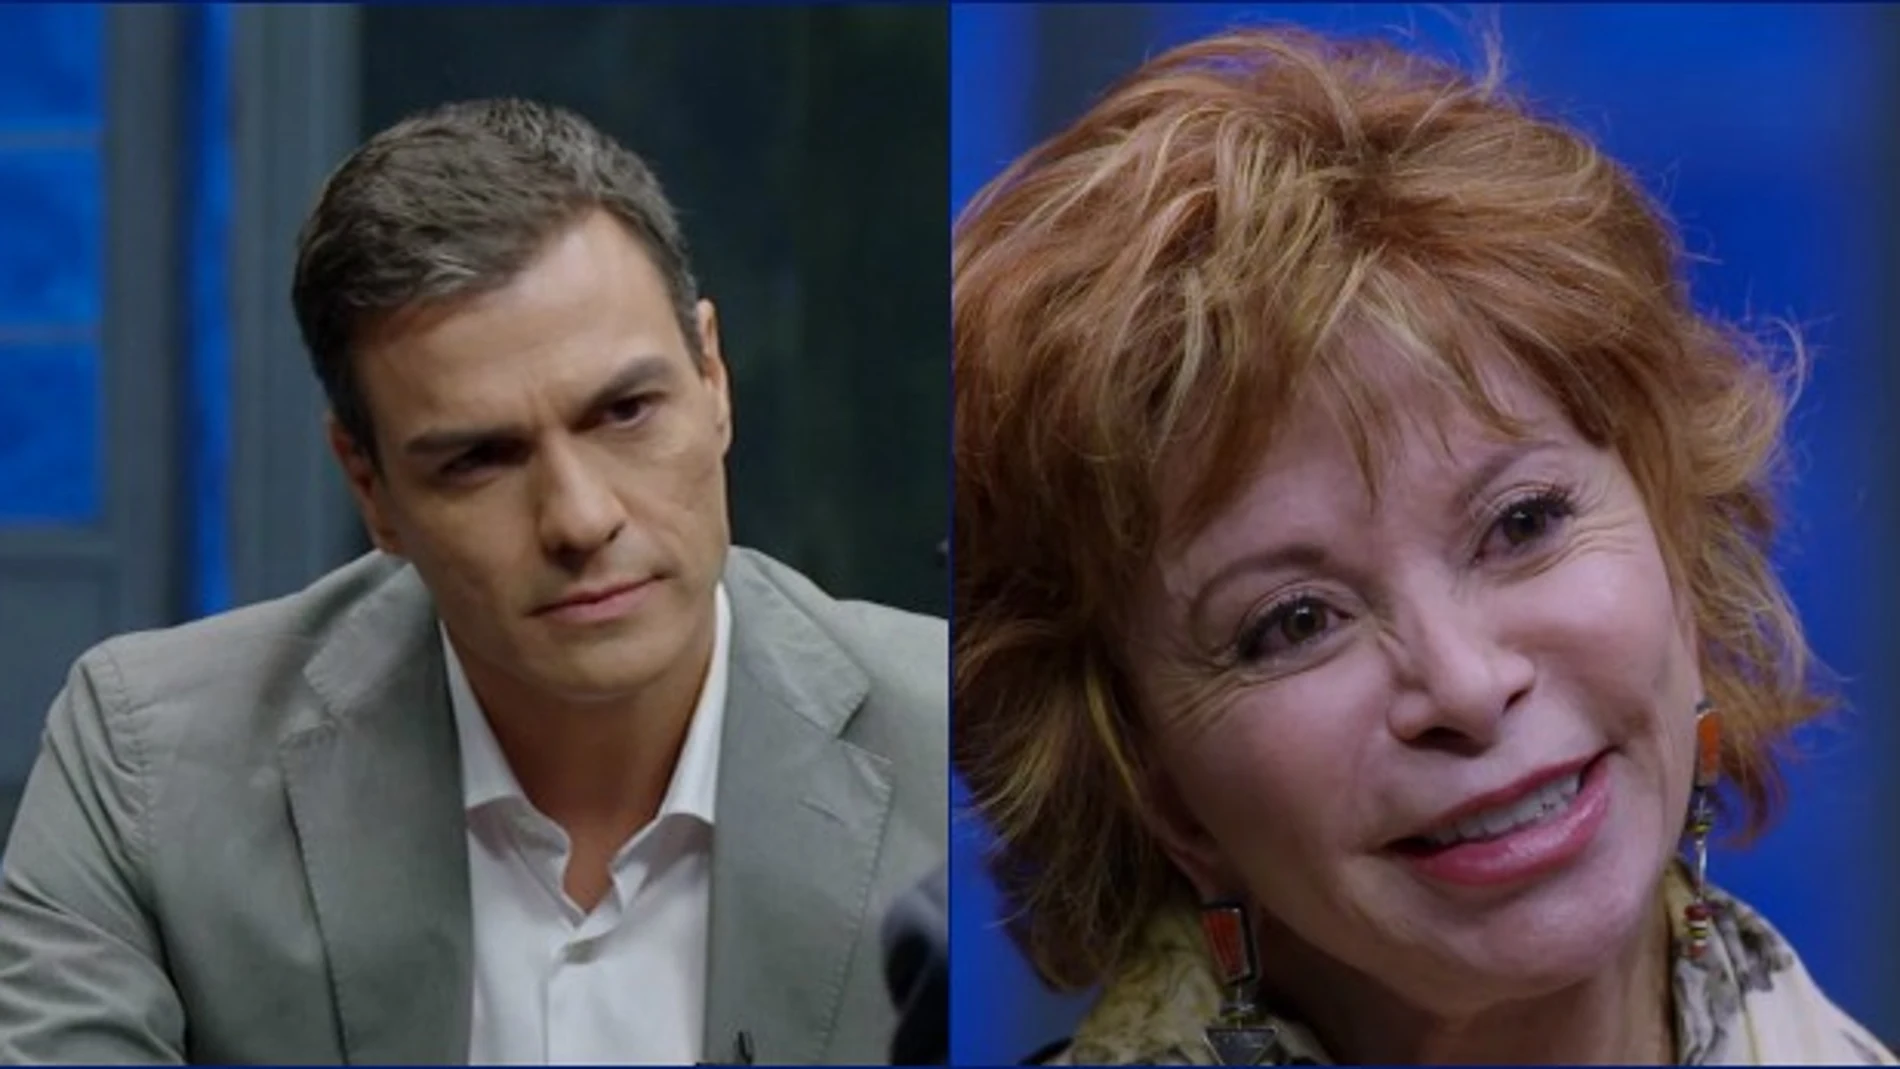 Montaje Pedro Sánchez e Isabel Allende en 'Al rincón'